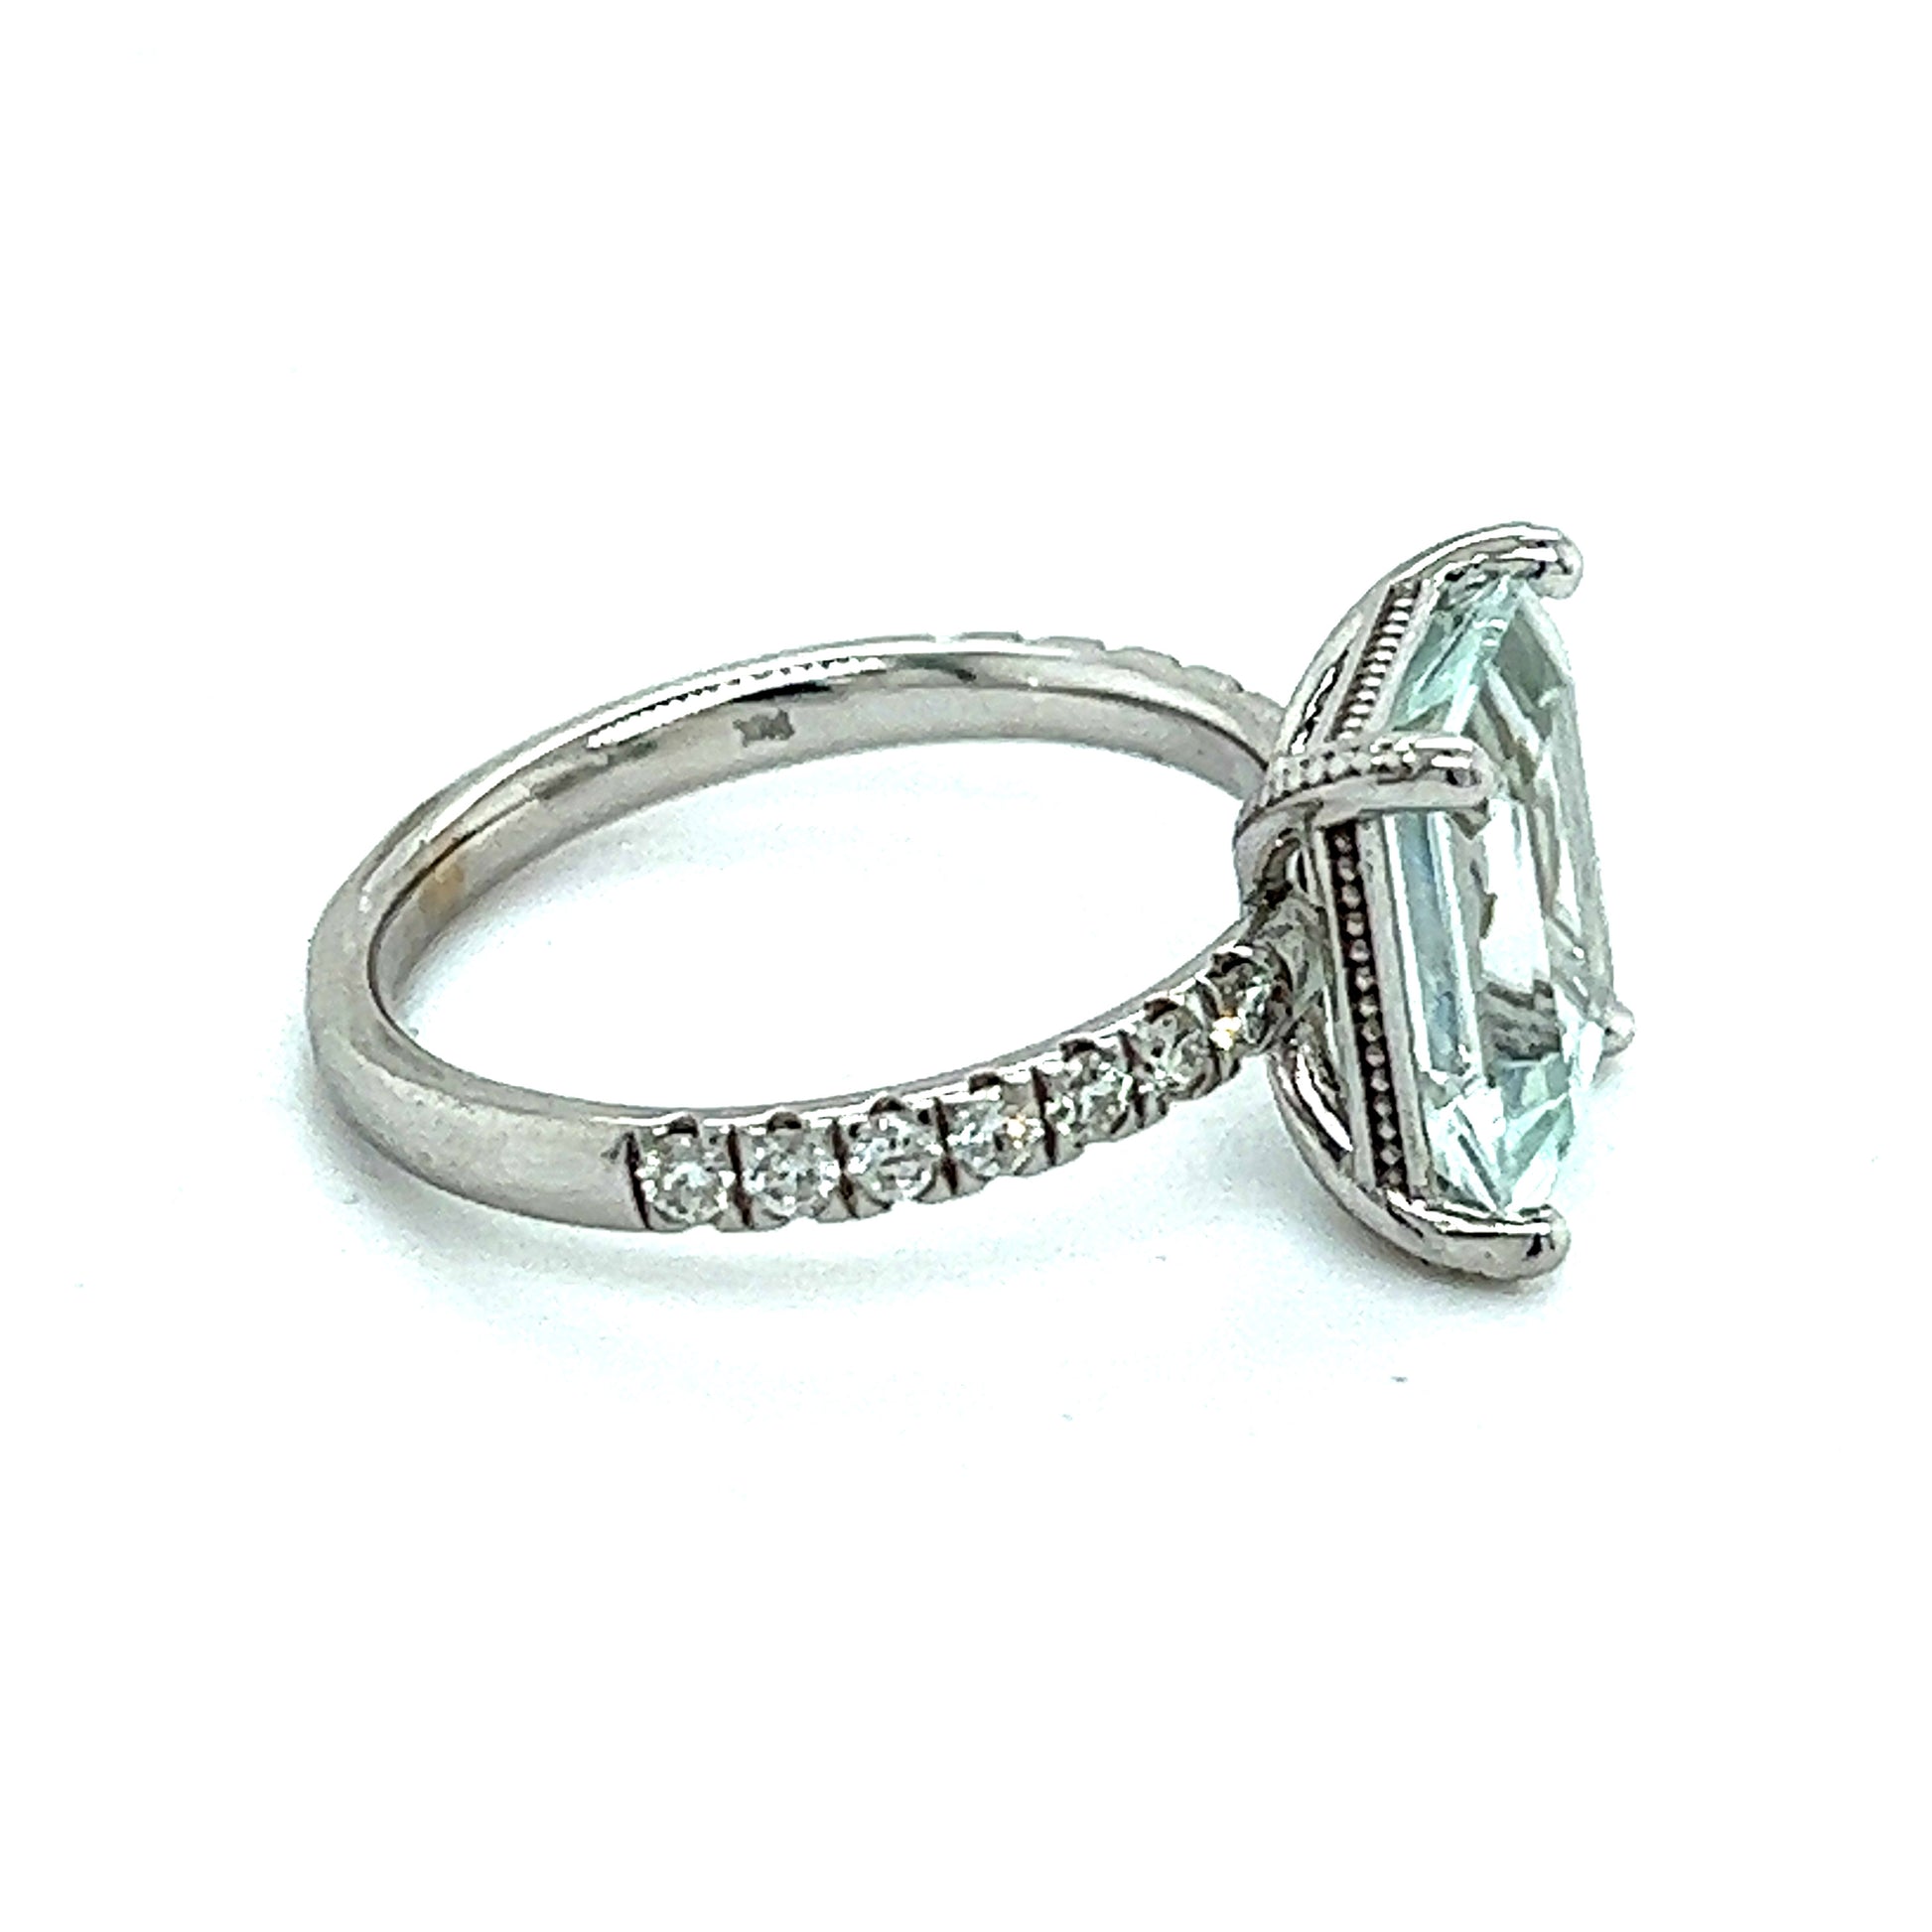 Natural Aquamarine Diamond Ring Size 6.5 14k W Gold 3.18 TCW Certified $4,975 217845